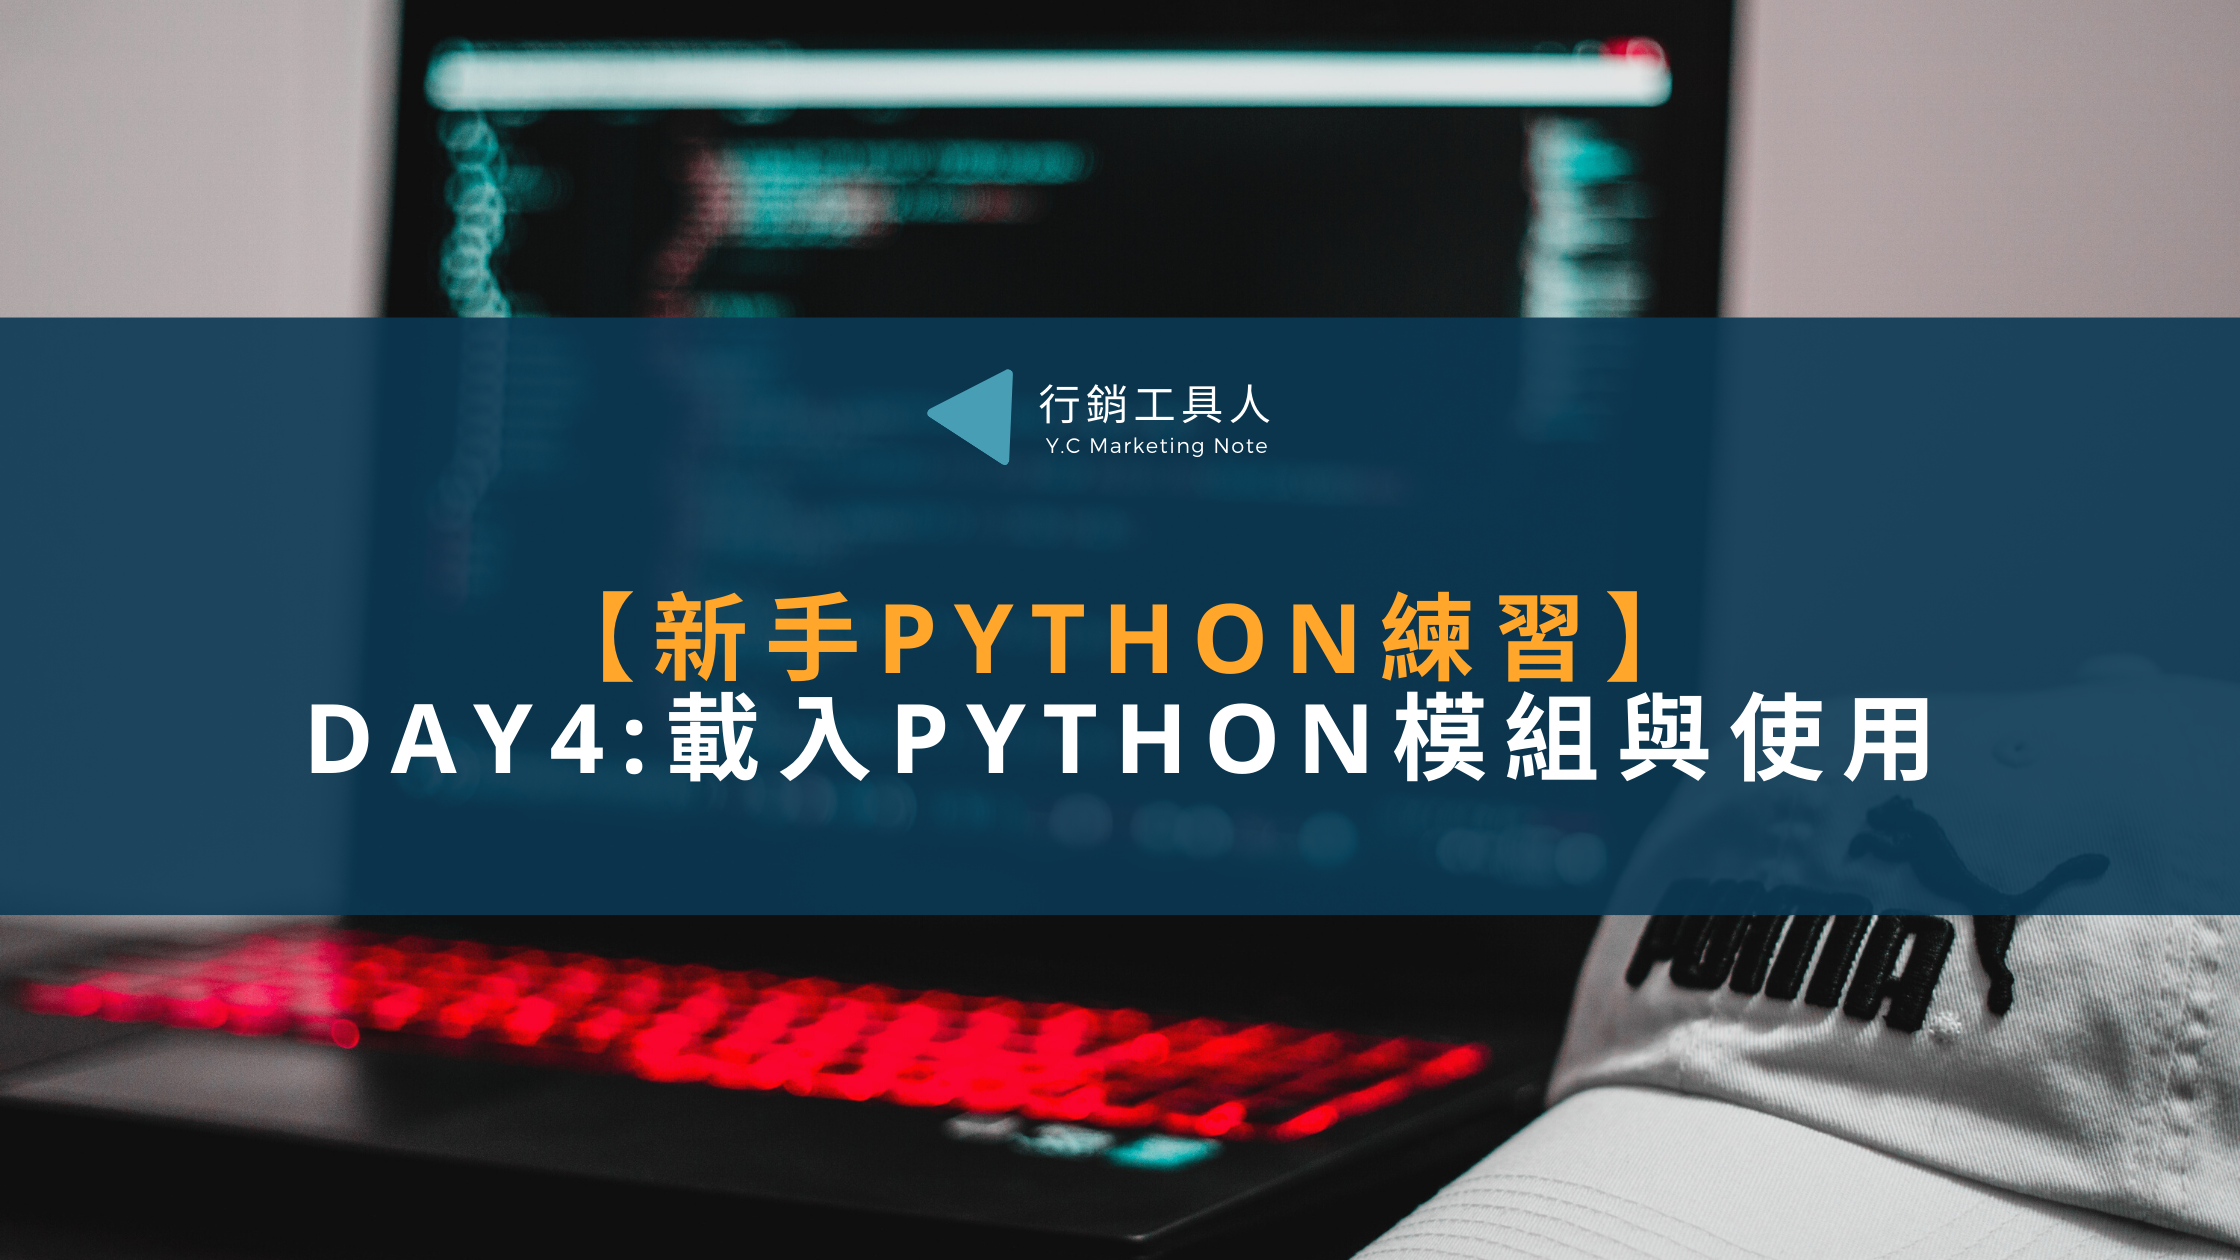 Day4(11/30):載入Python模組與使用